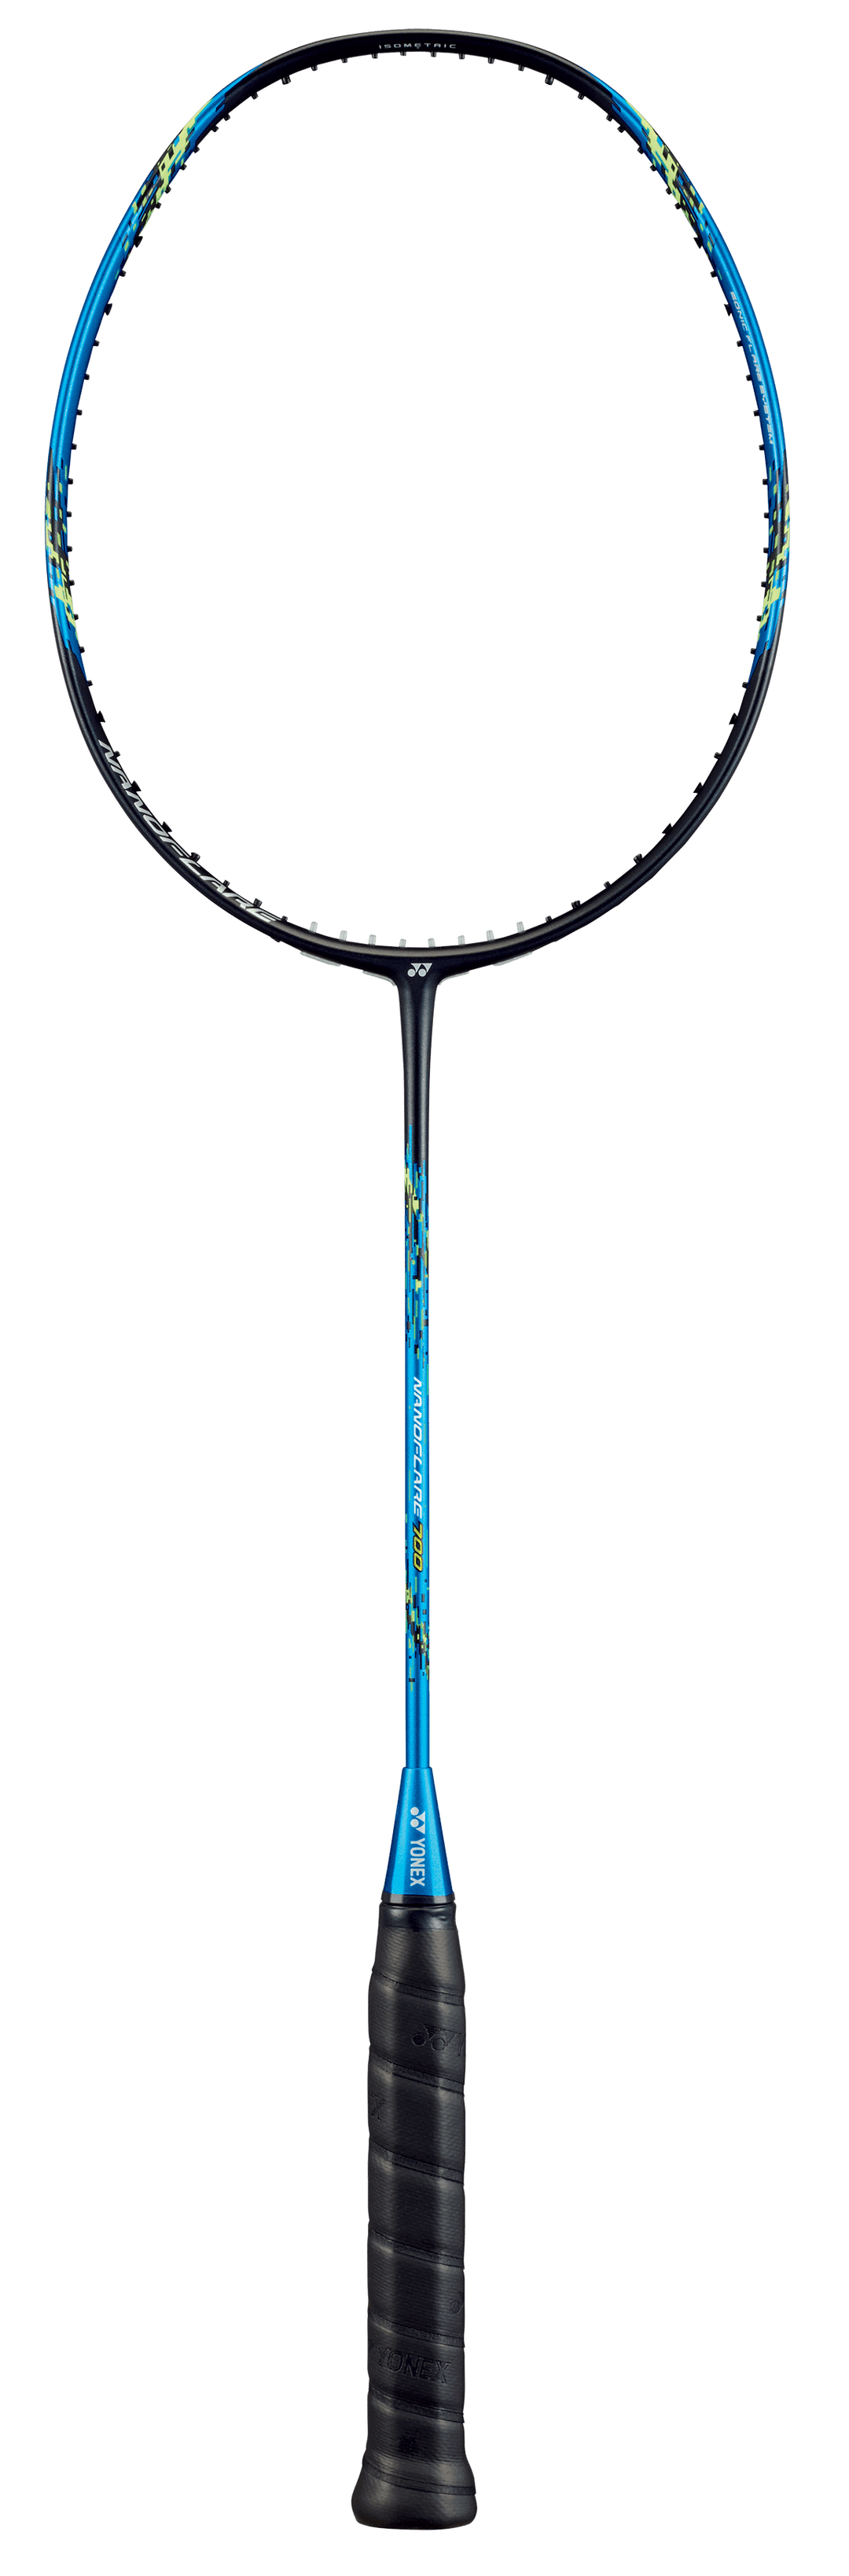 Yonex Nanoflare 700 5U Badminton Racket (Frame) Badminton Racquets Yonex G5 Cyan/Black 